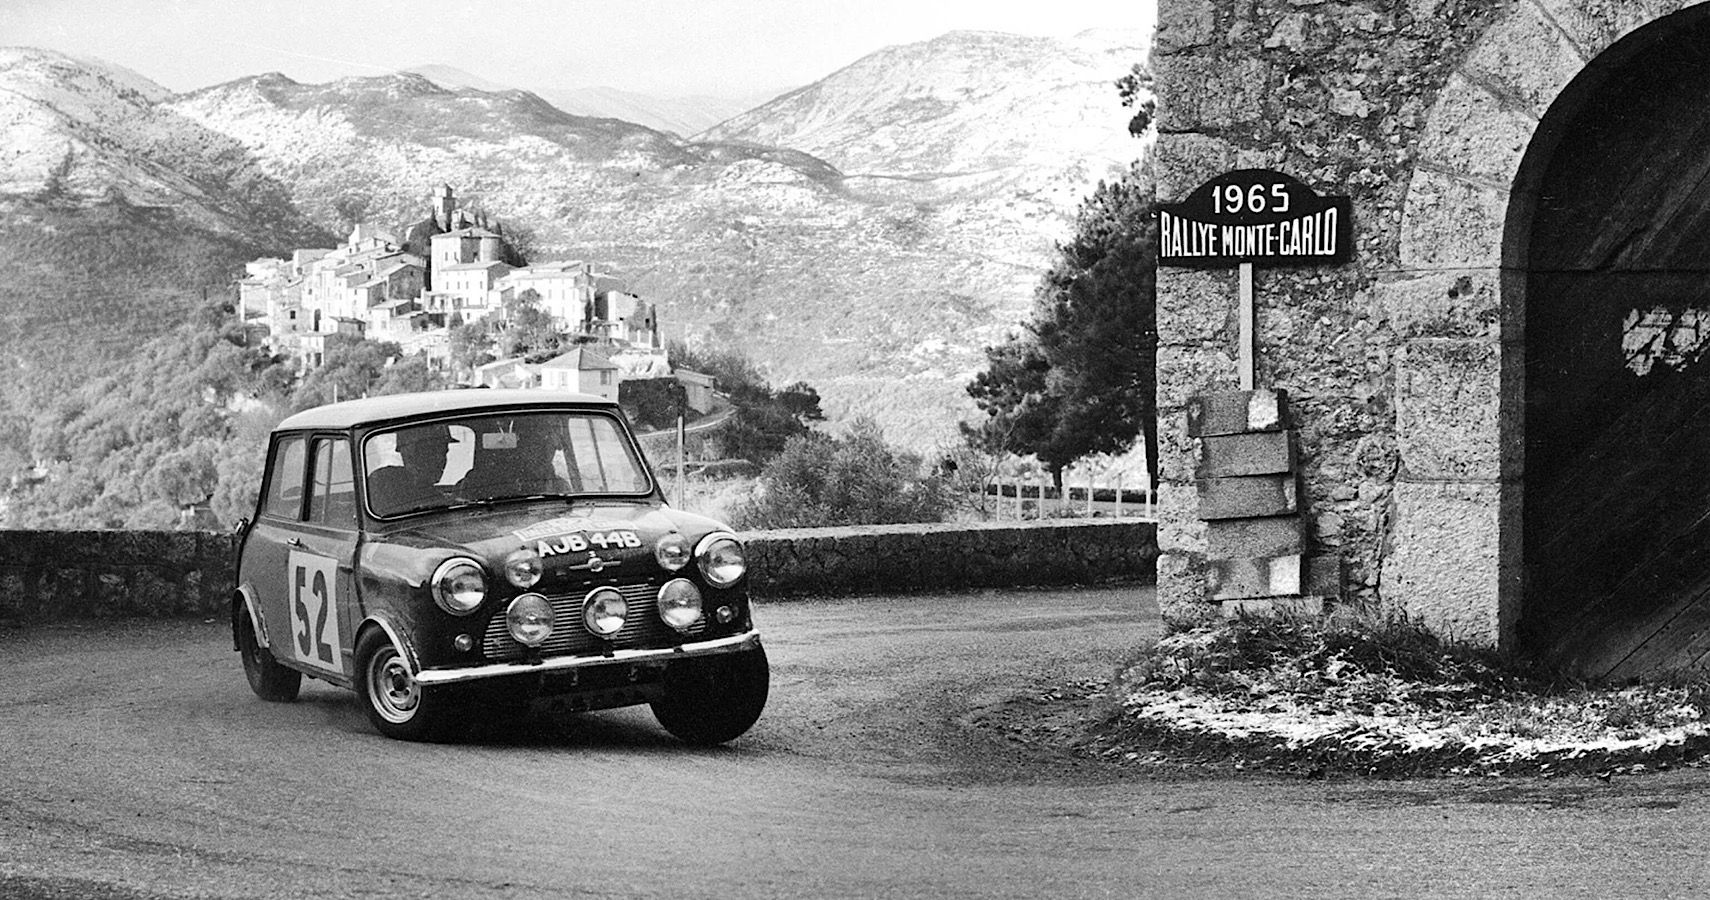 BMC Mini Running In The 1965 Monte Carlo Rally